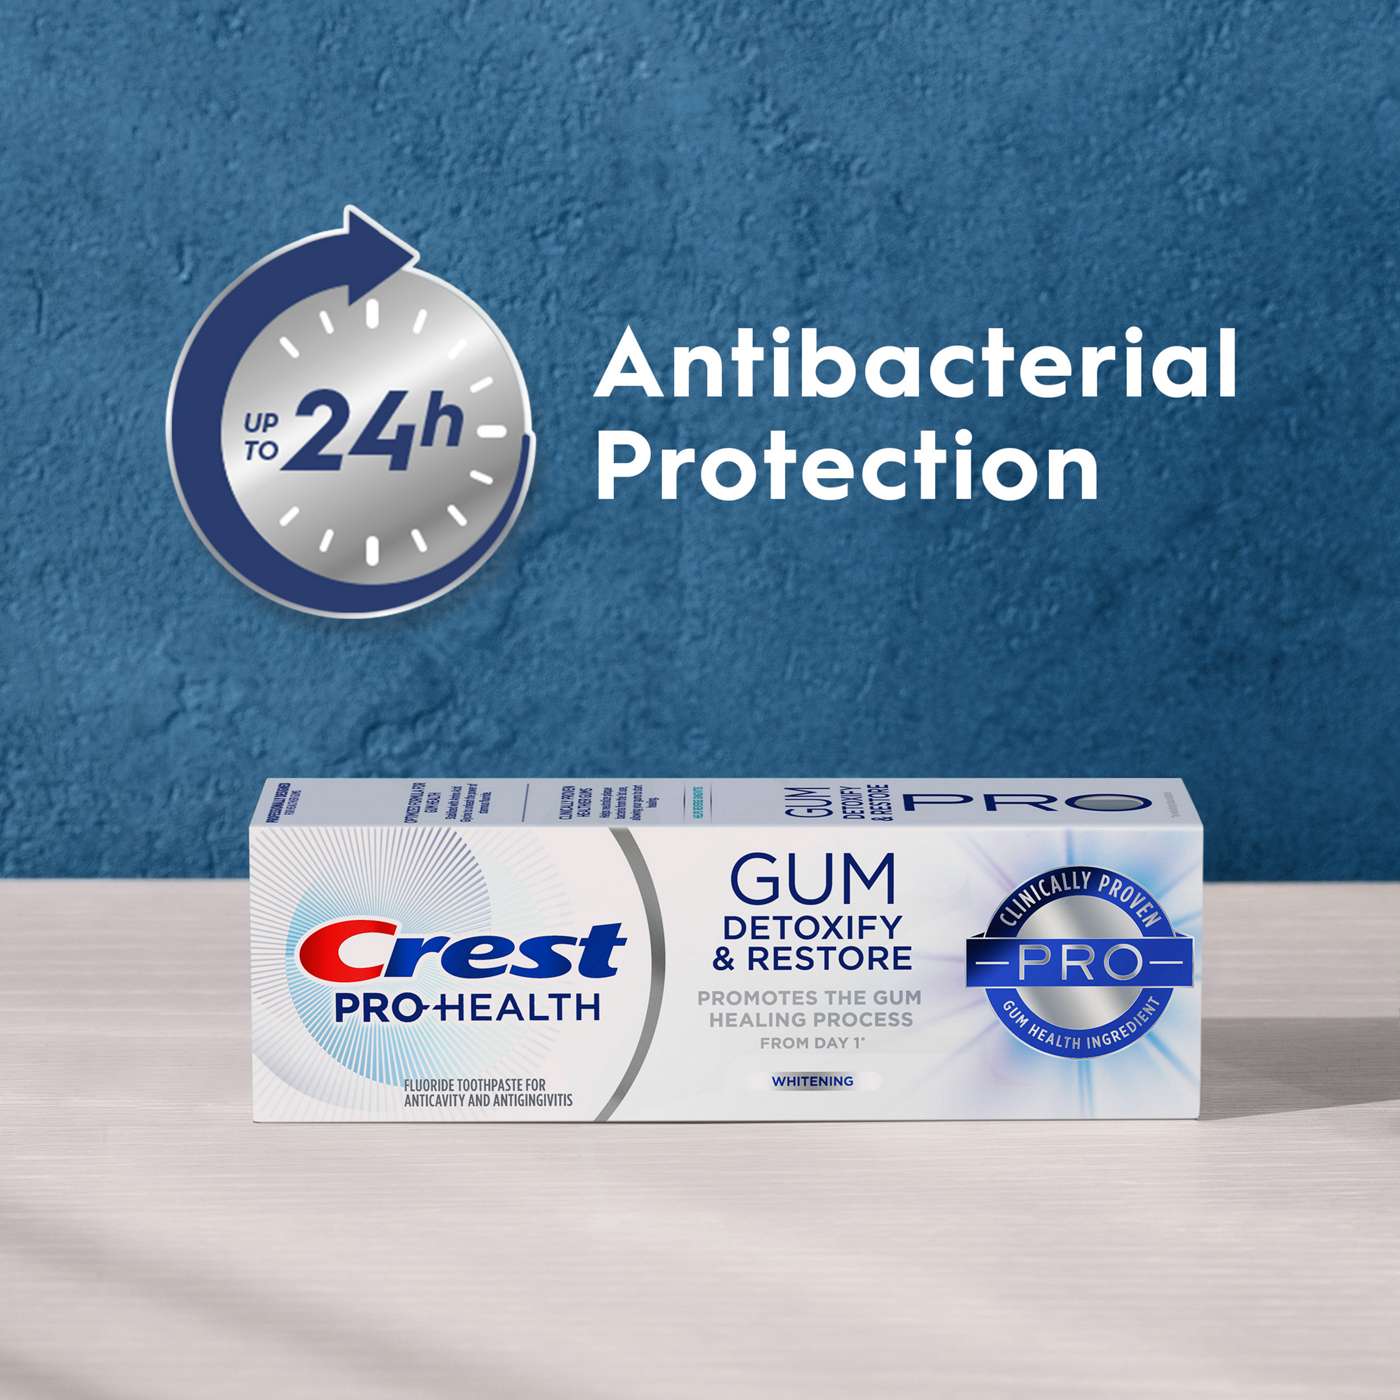 Crest Pro Health Gum Detoxify & Restore - Whitening; image 6 of 8